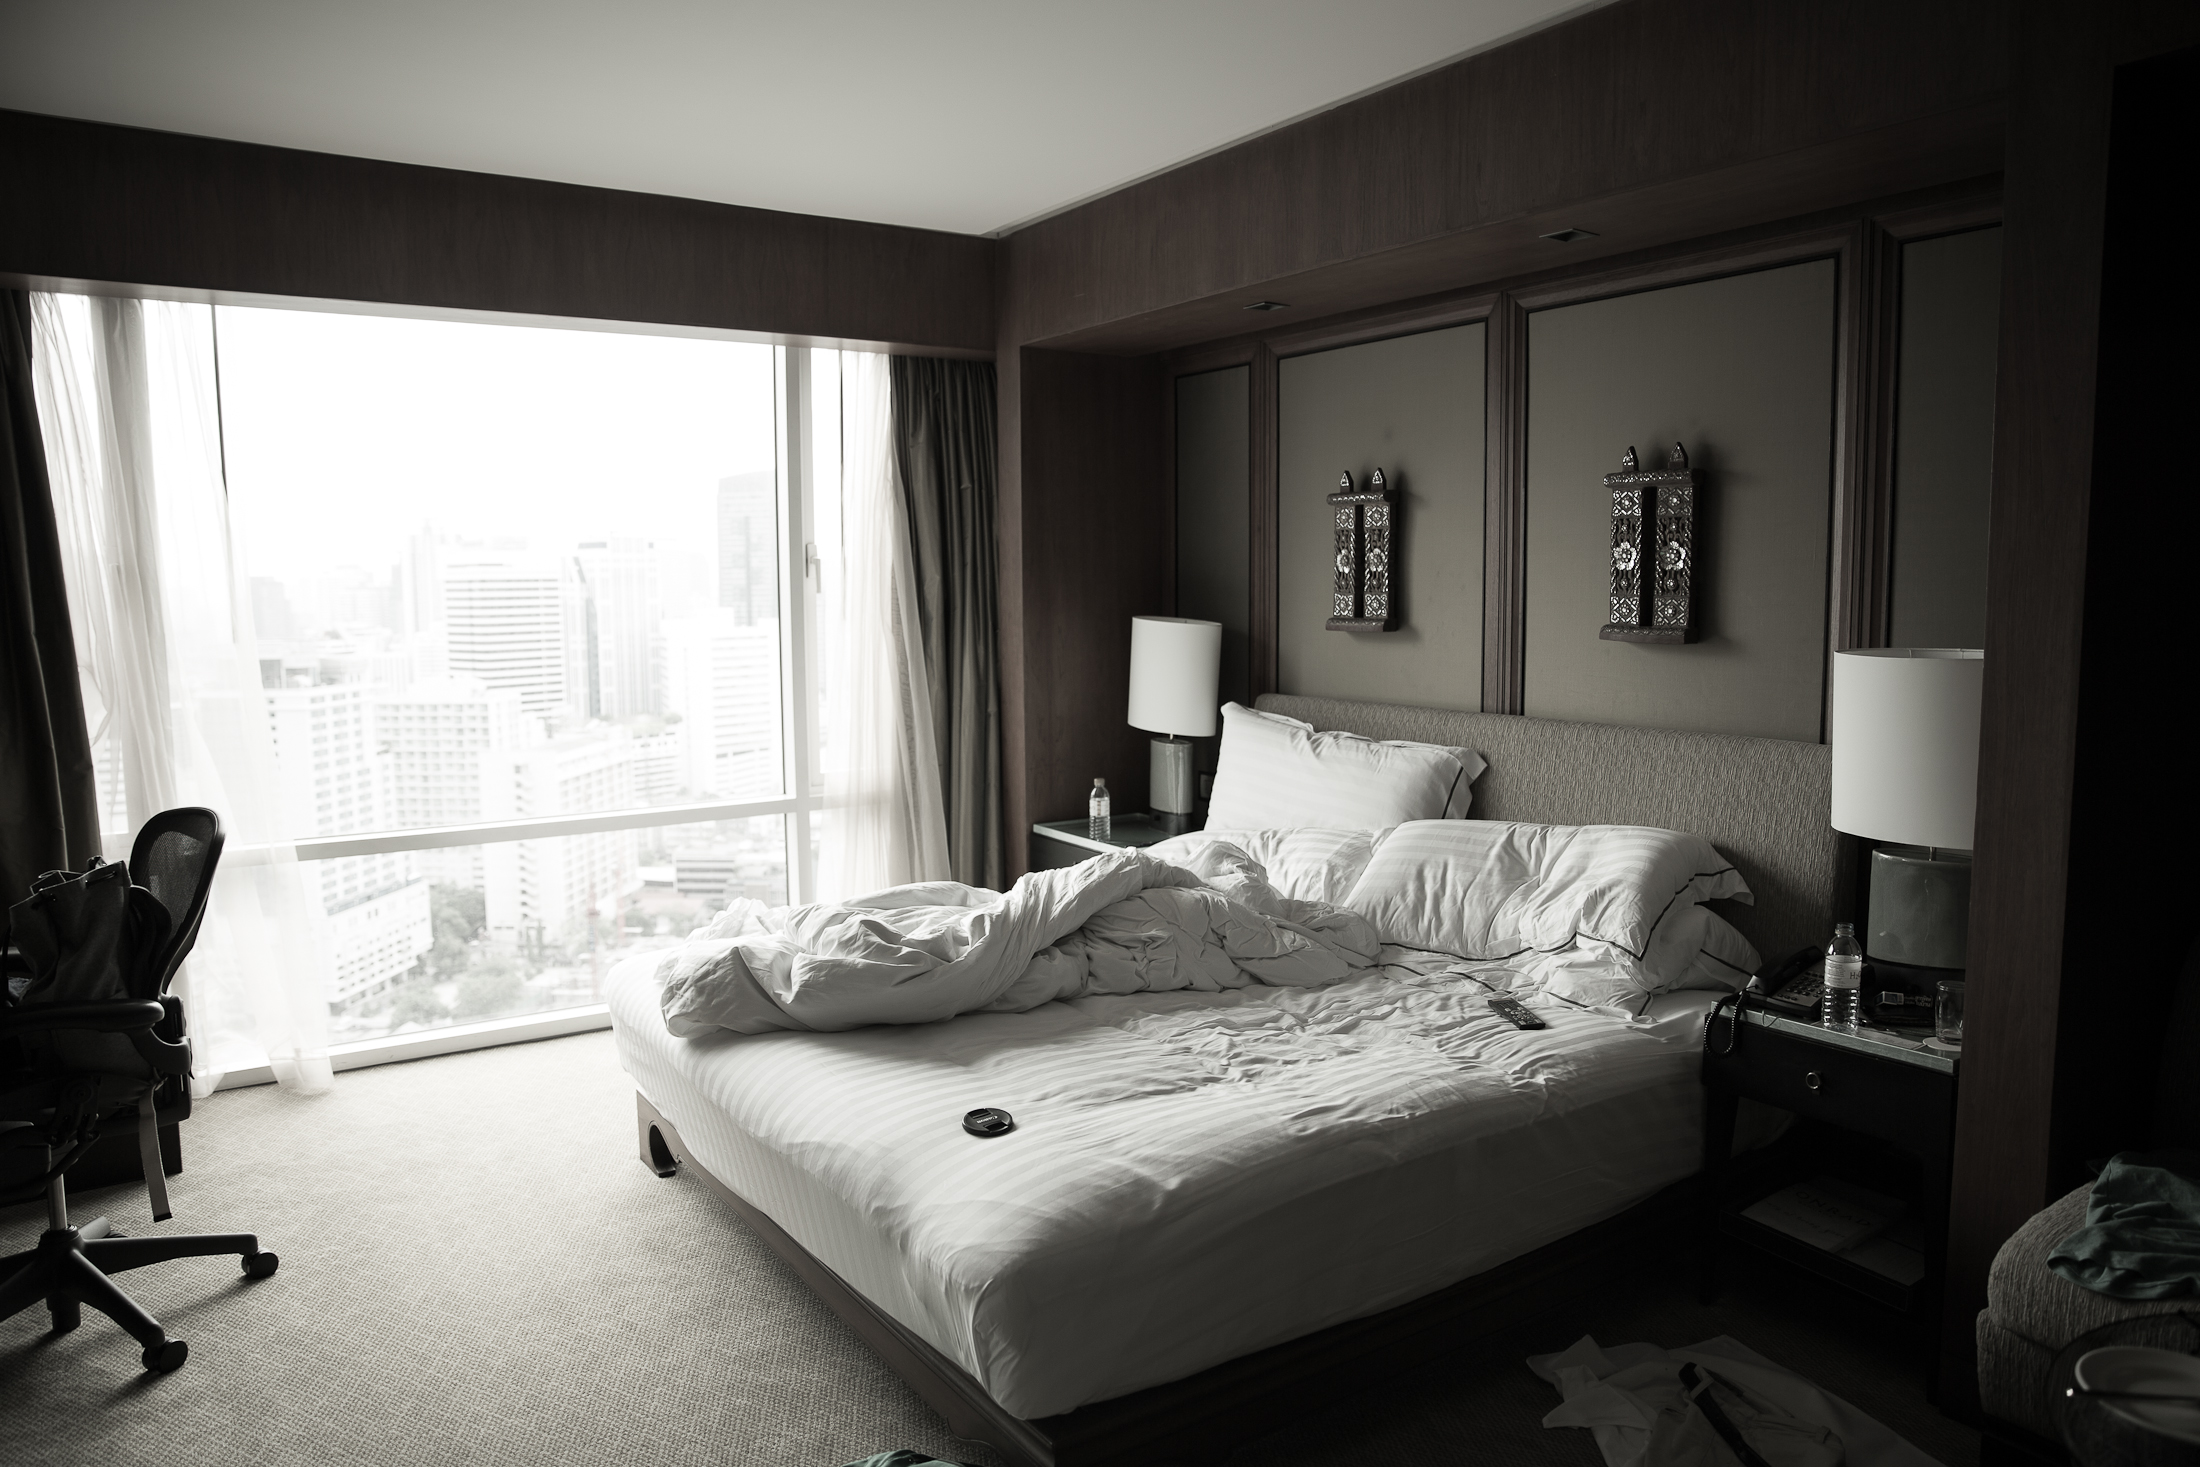 sher she goes thailand conrad hotel bangkok luxury southeast asia bedroom 